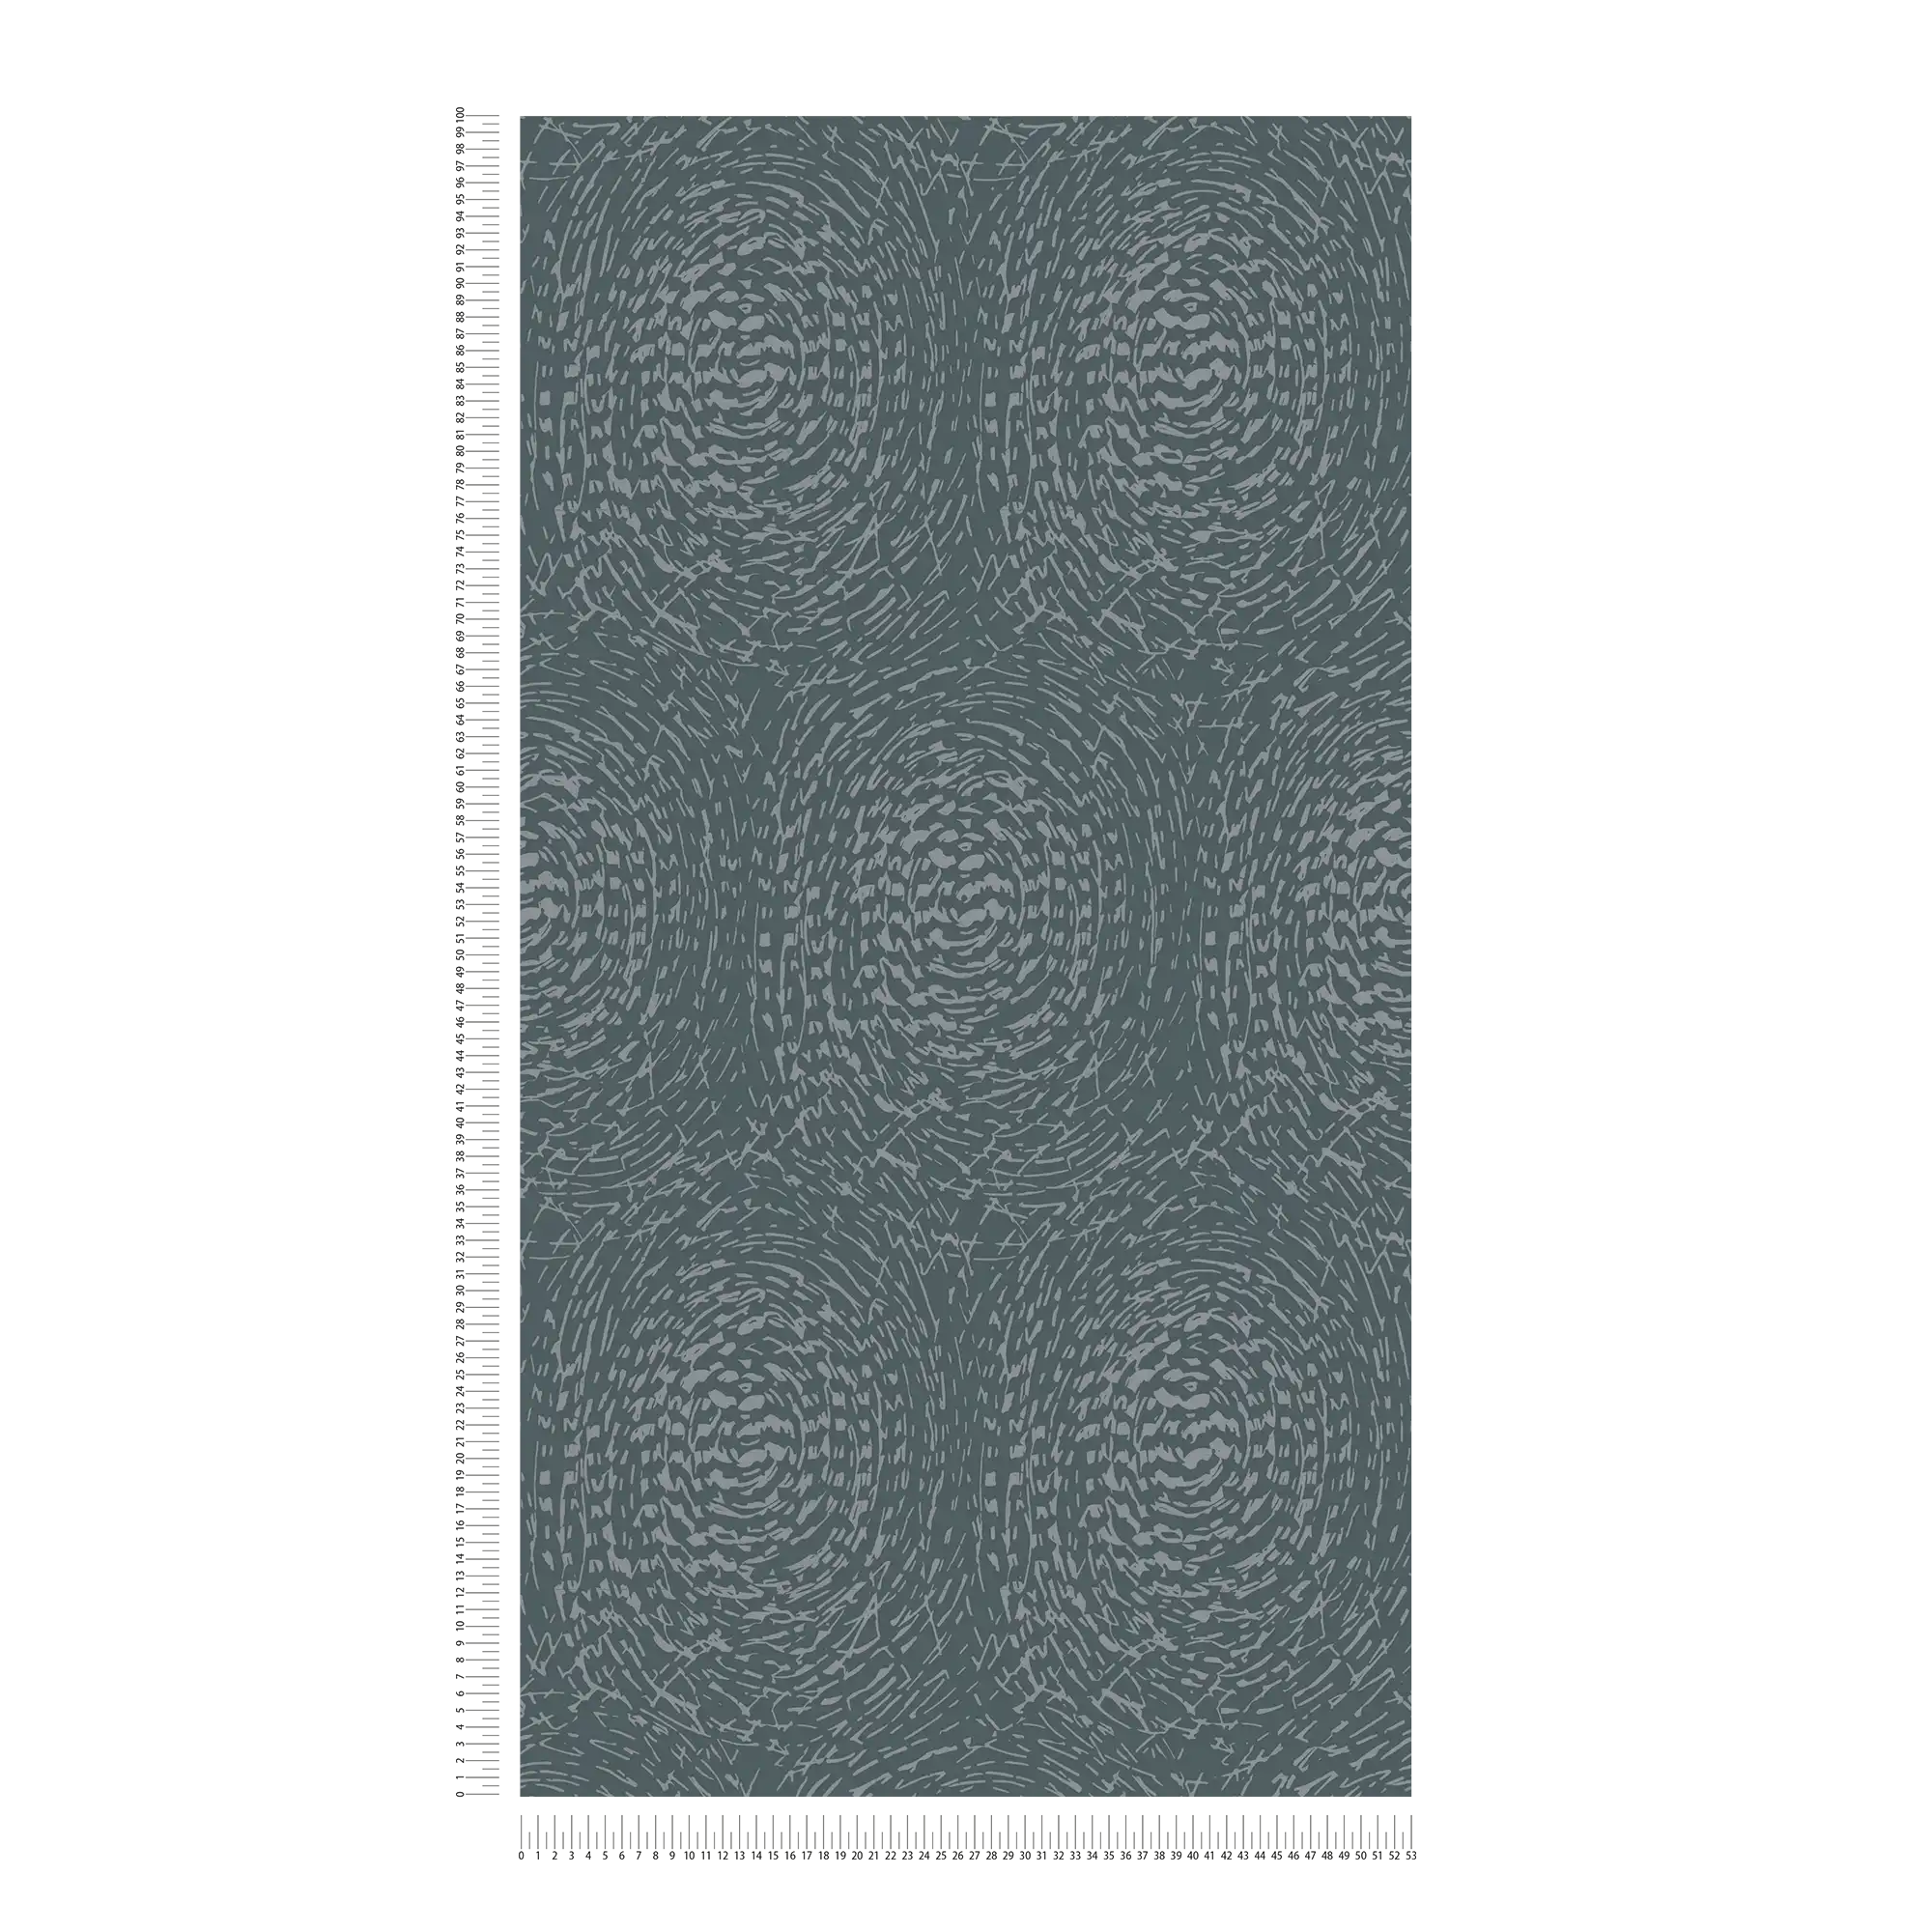             Tapete Ethno Design mit Metallic Farbe & Strukturdesign – Blau, Metallic
        